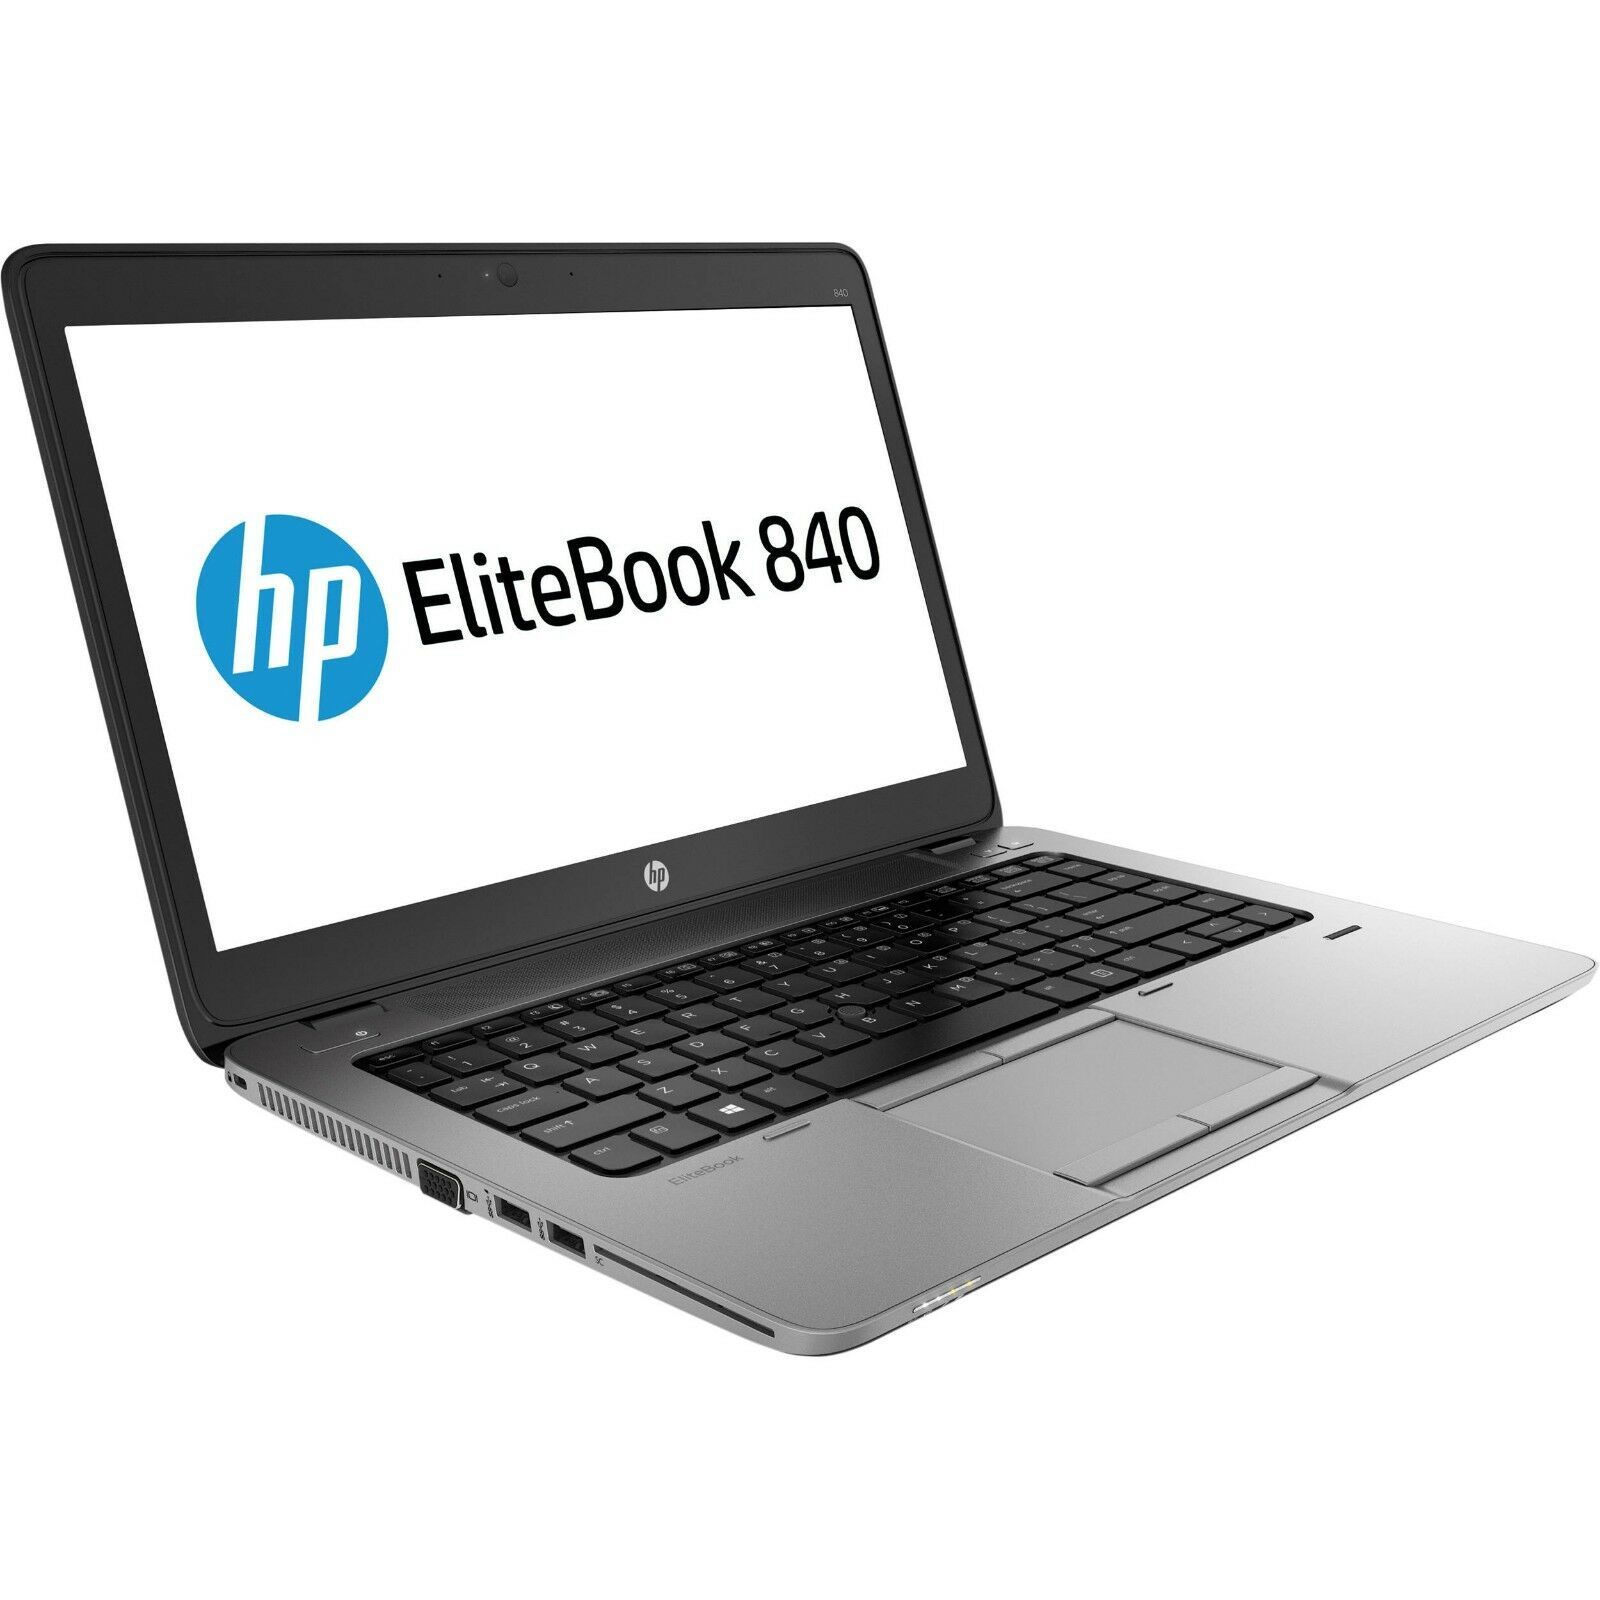 HP Elitebook 840 G2 Intel i5 5300u 2.30Ghz 4GB RAM 128GB SSD 14" NO OS Notebook Full Size Image